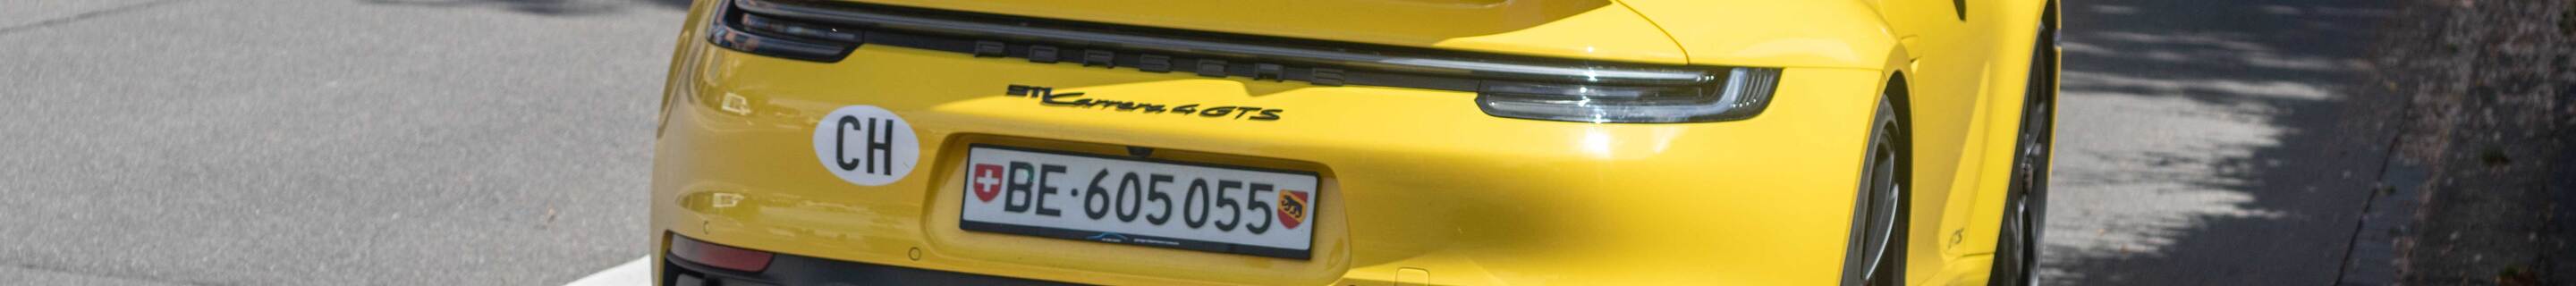 Porsche 992 Carrera 4 GTS